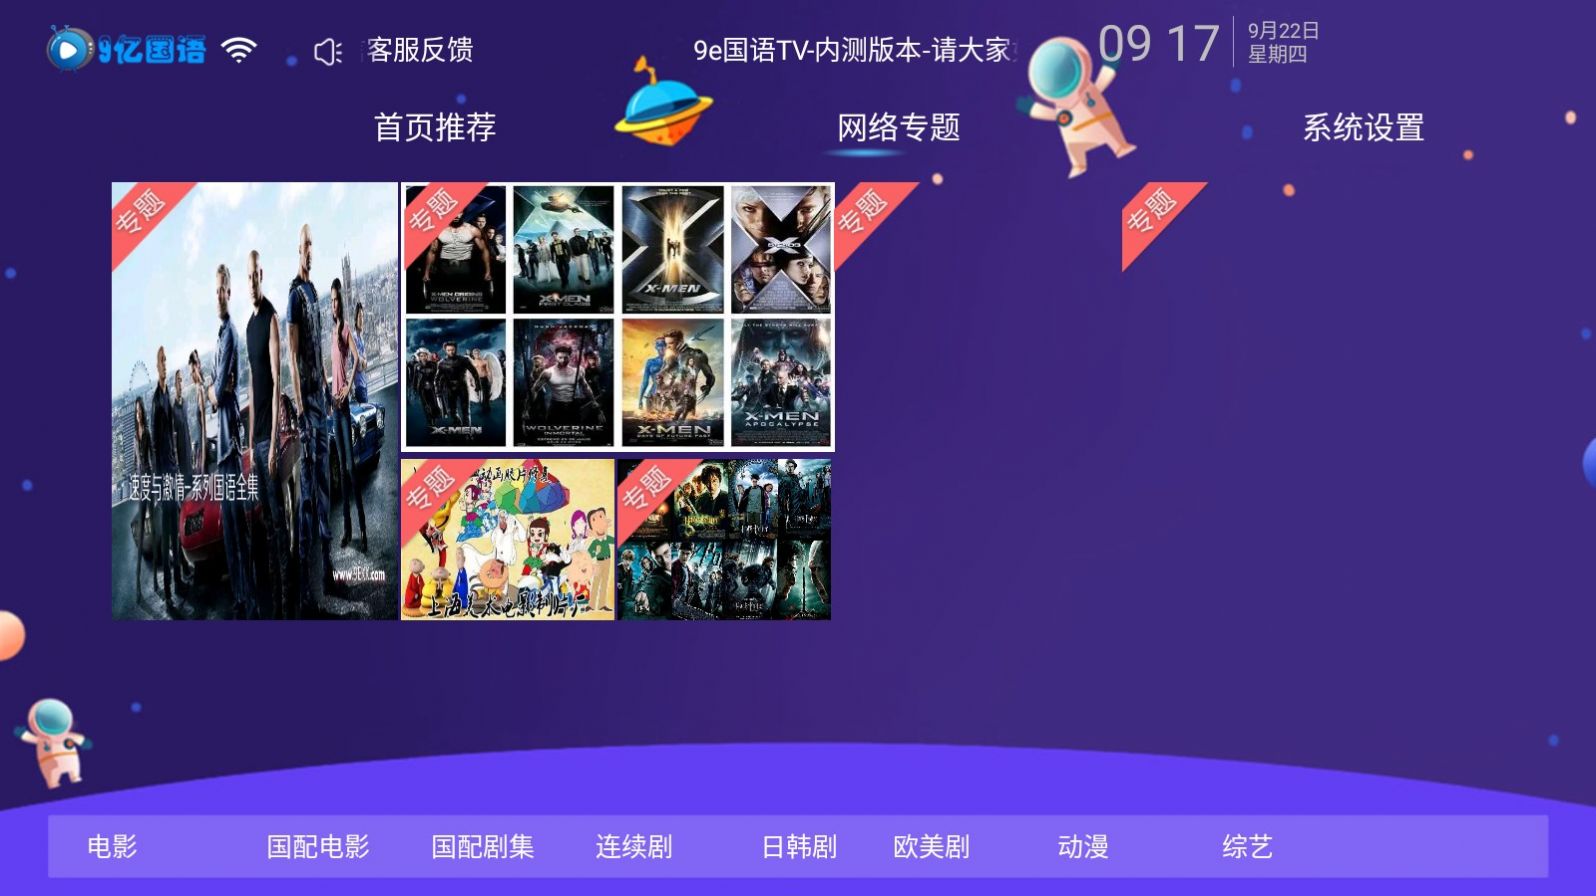 9e国语TV影视app官方图片1